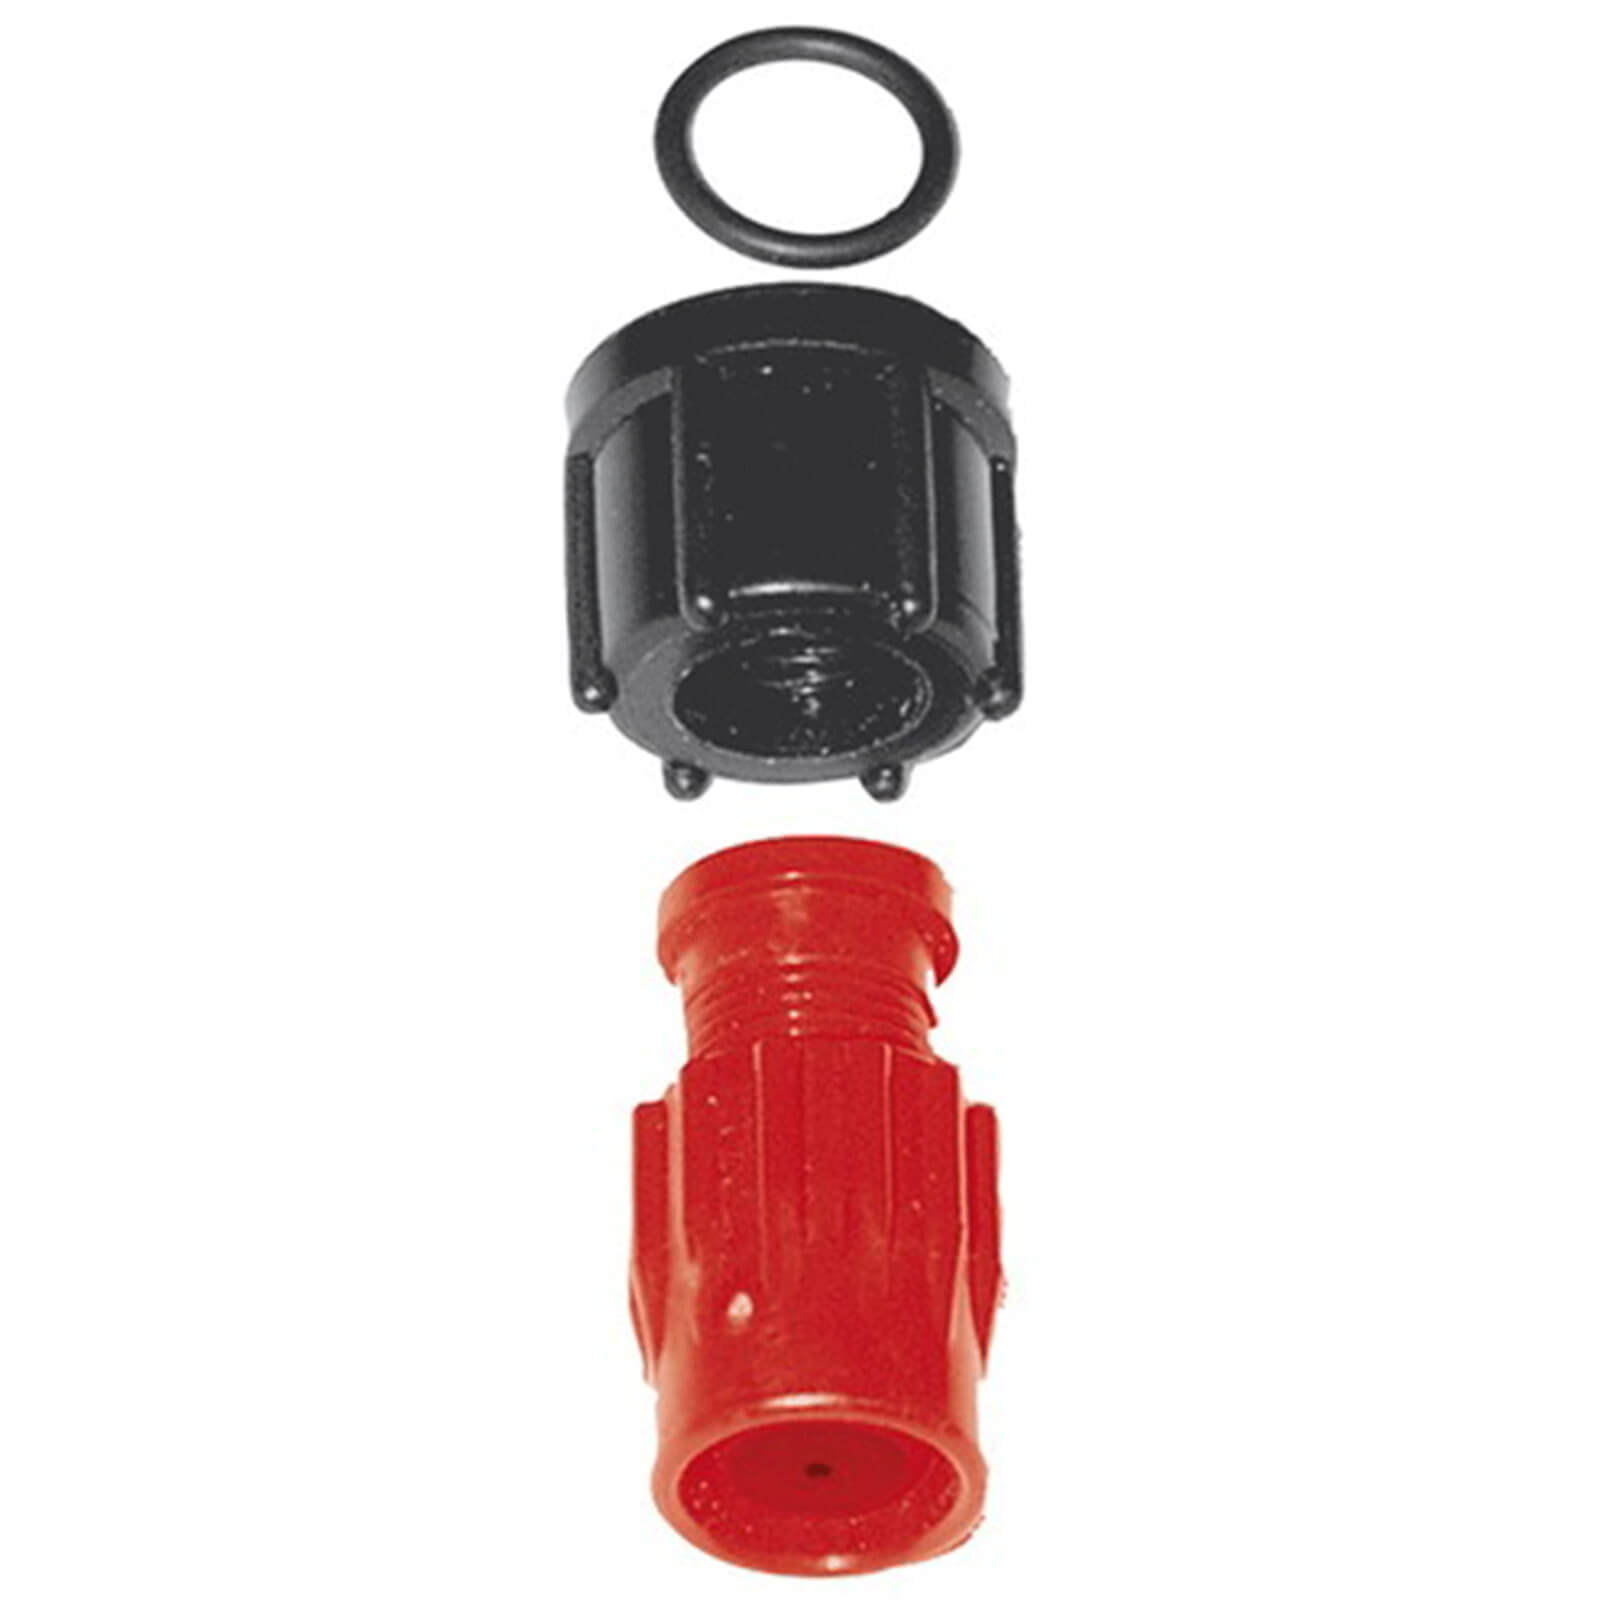 Image of Solo Adjustable High Pressure Plastic Nozzle for Pressure Sprayers